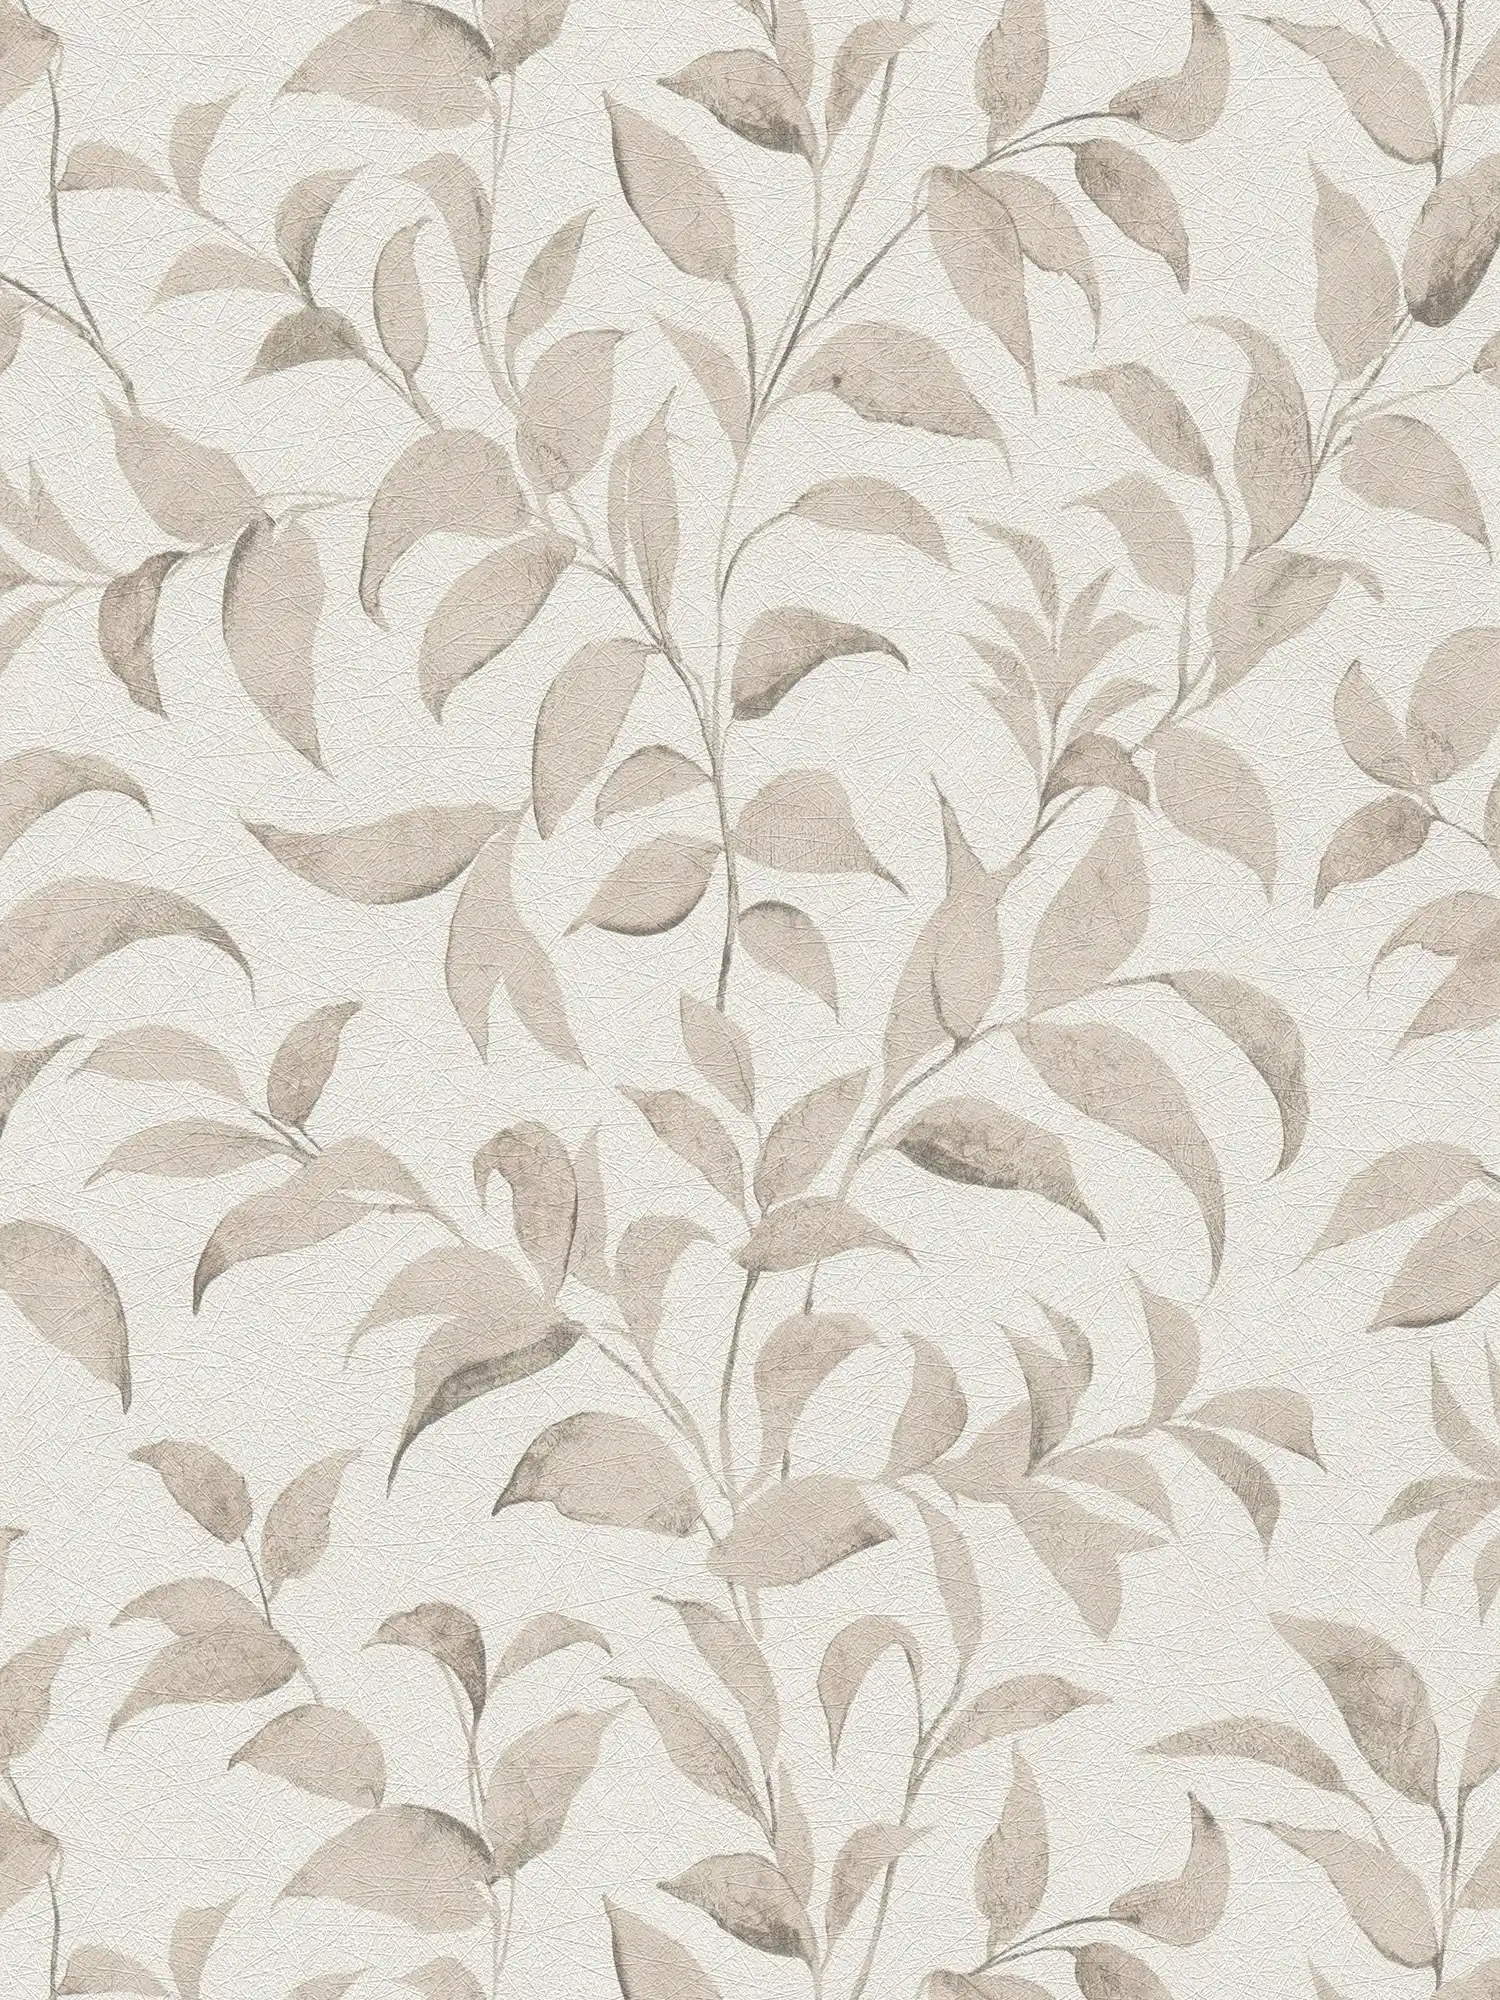         Floral leaves wallpaper textured shimmering - white, grey, beige
    